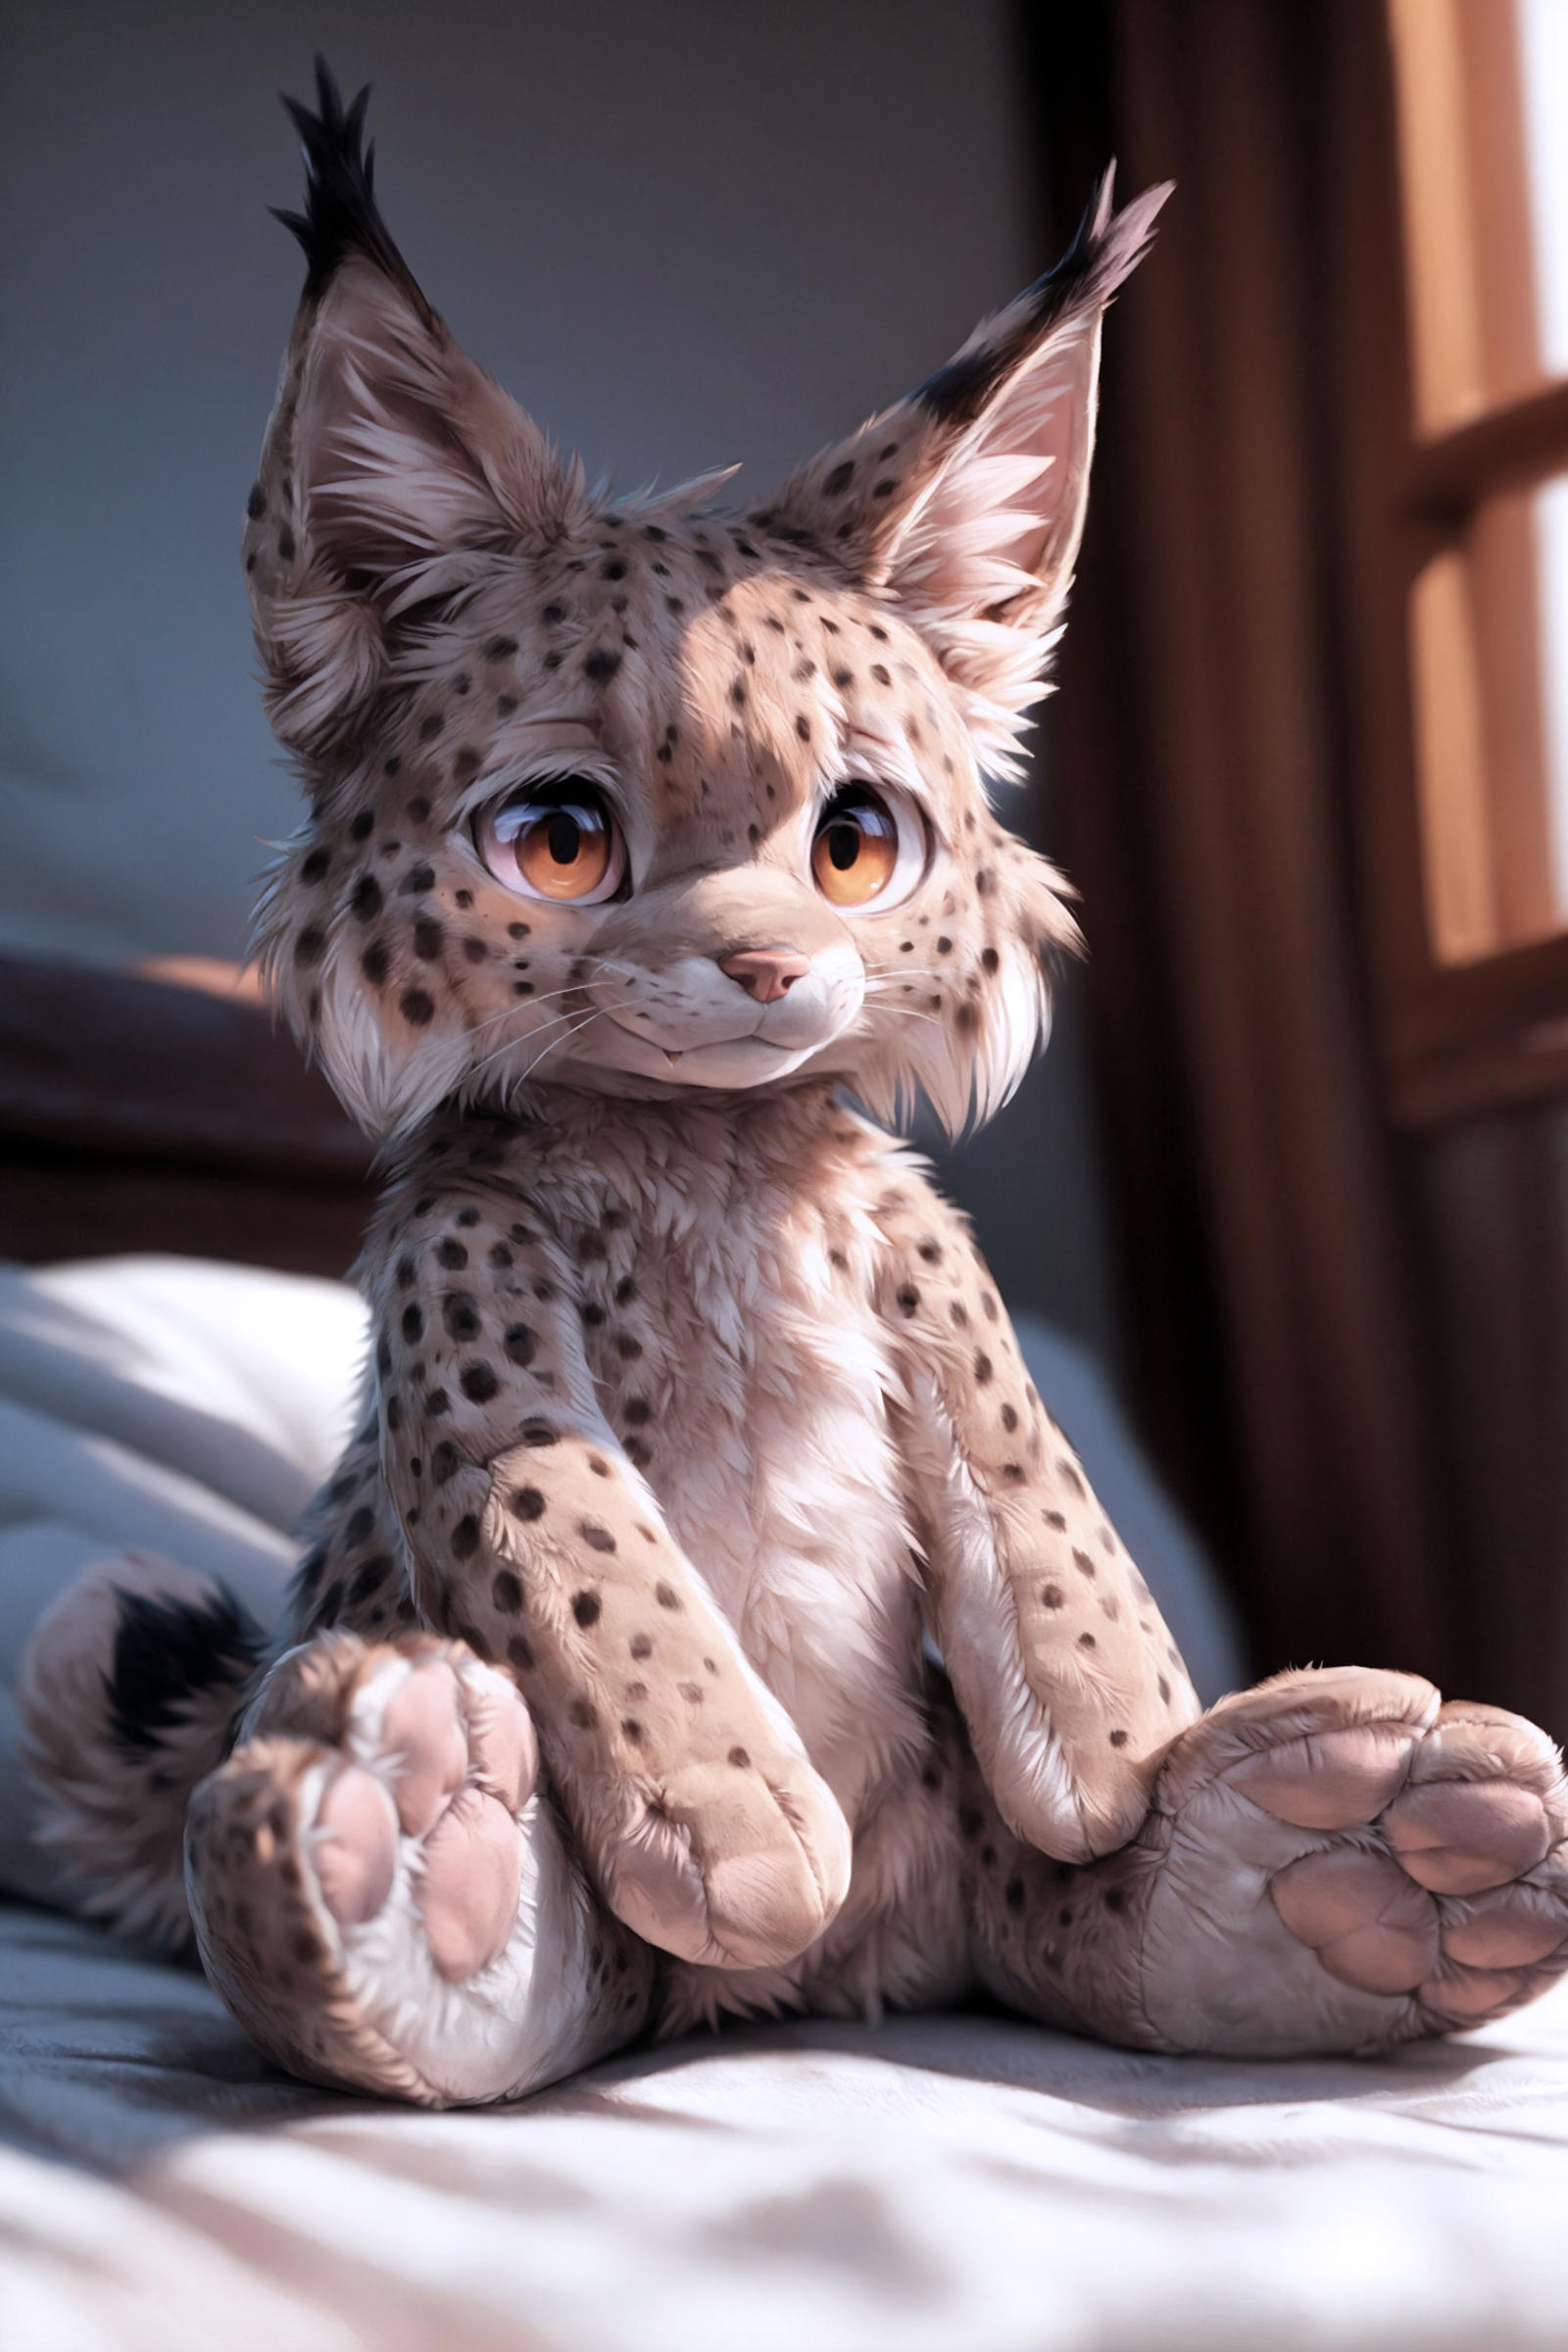 A Cartoon Cheetah Stuffed Animal Sitting on a Bed.